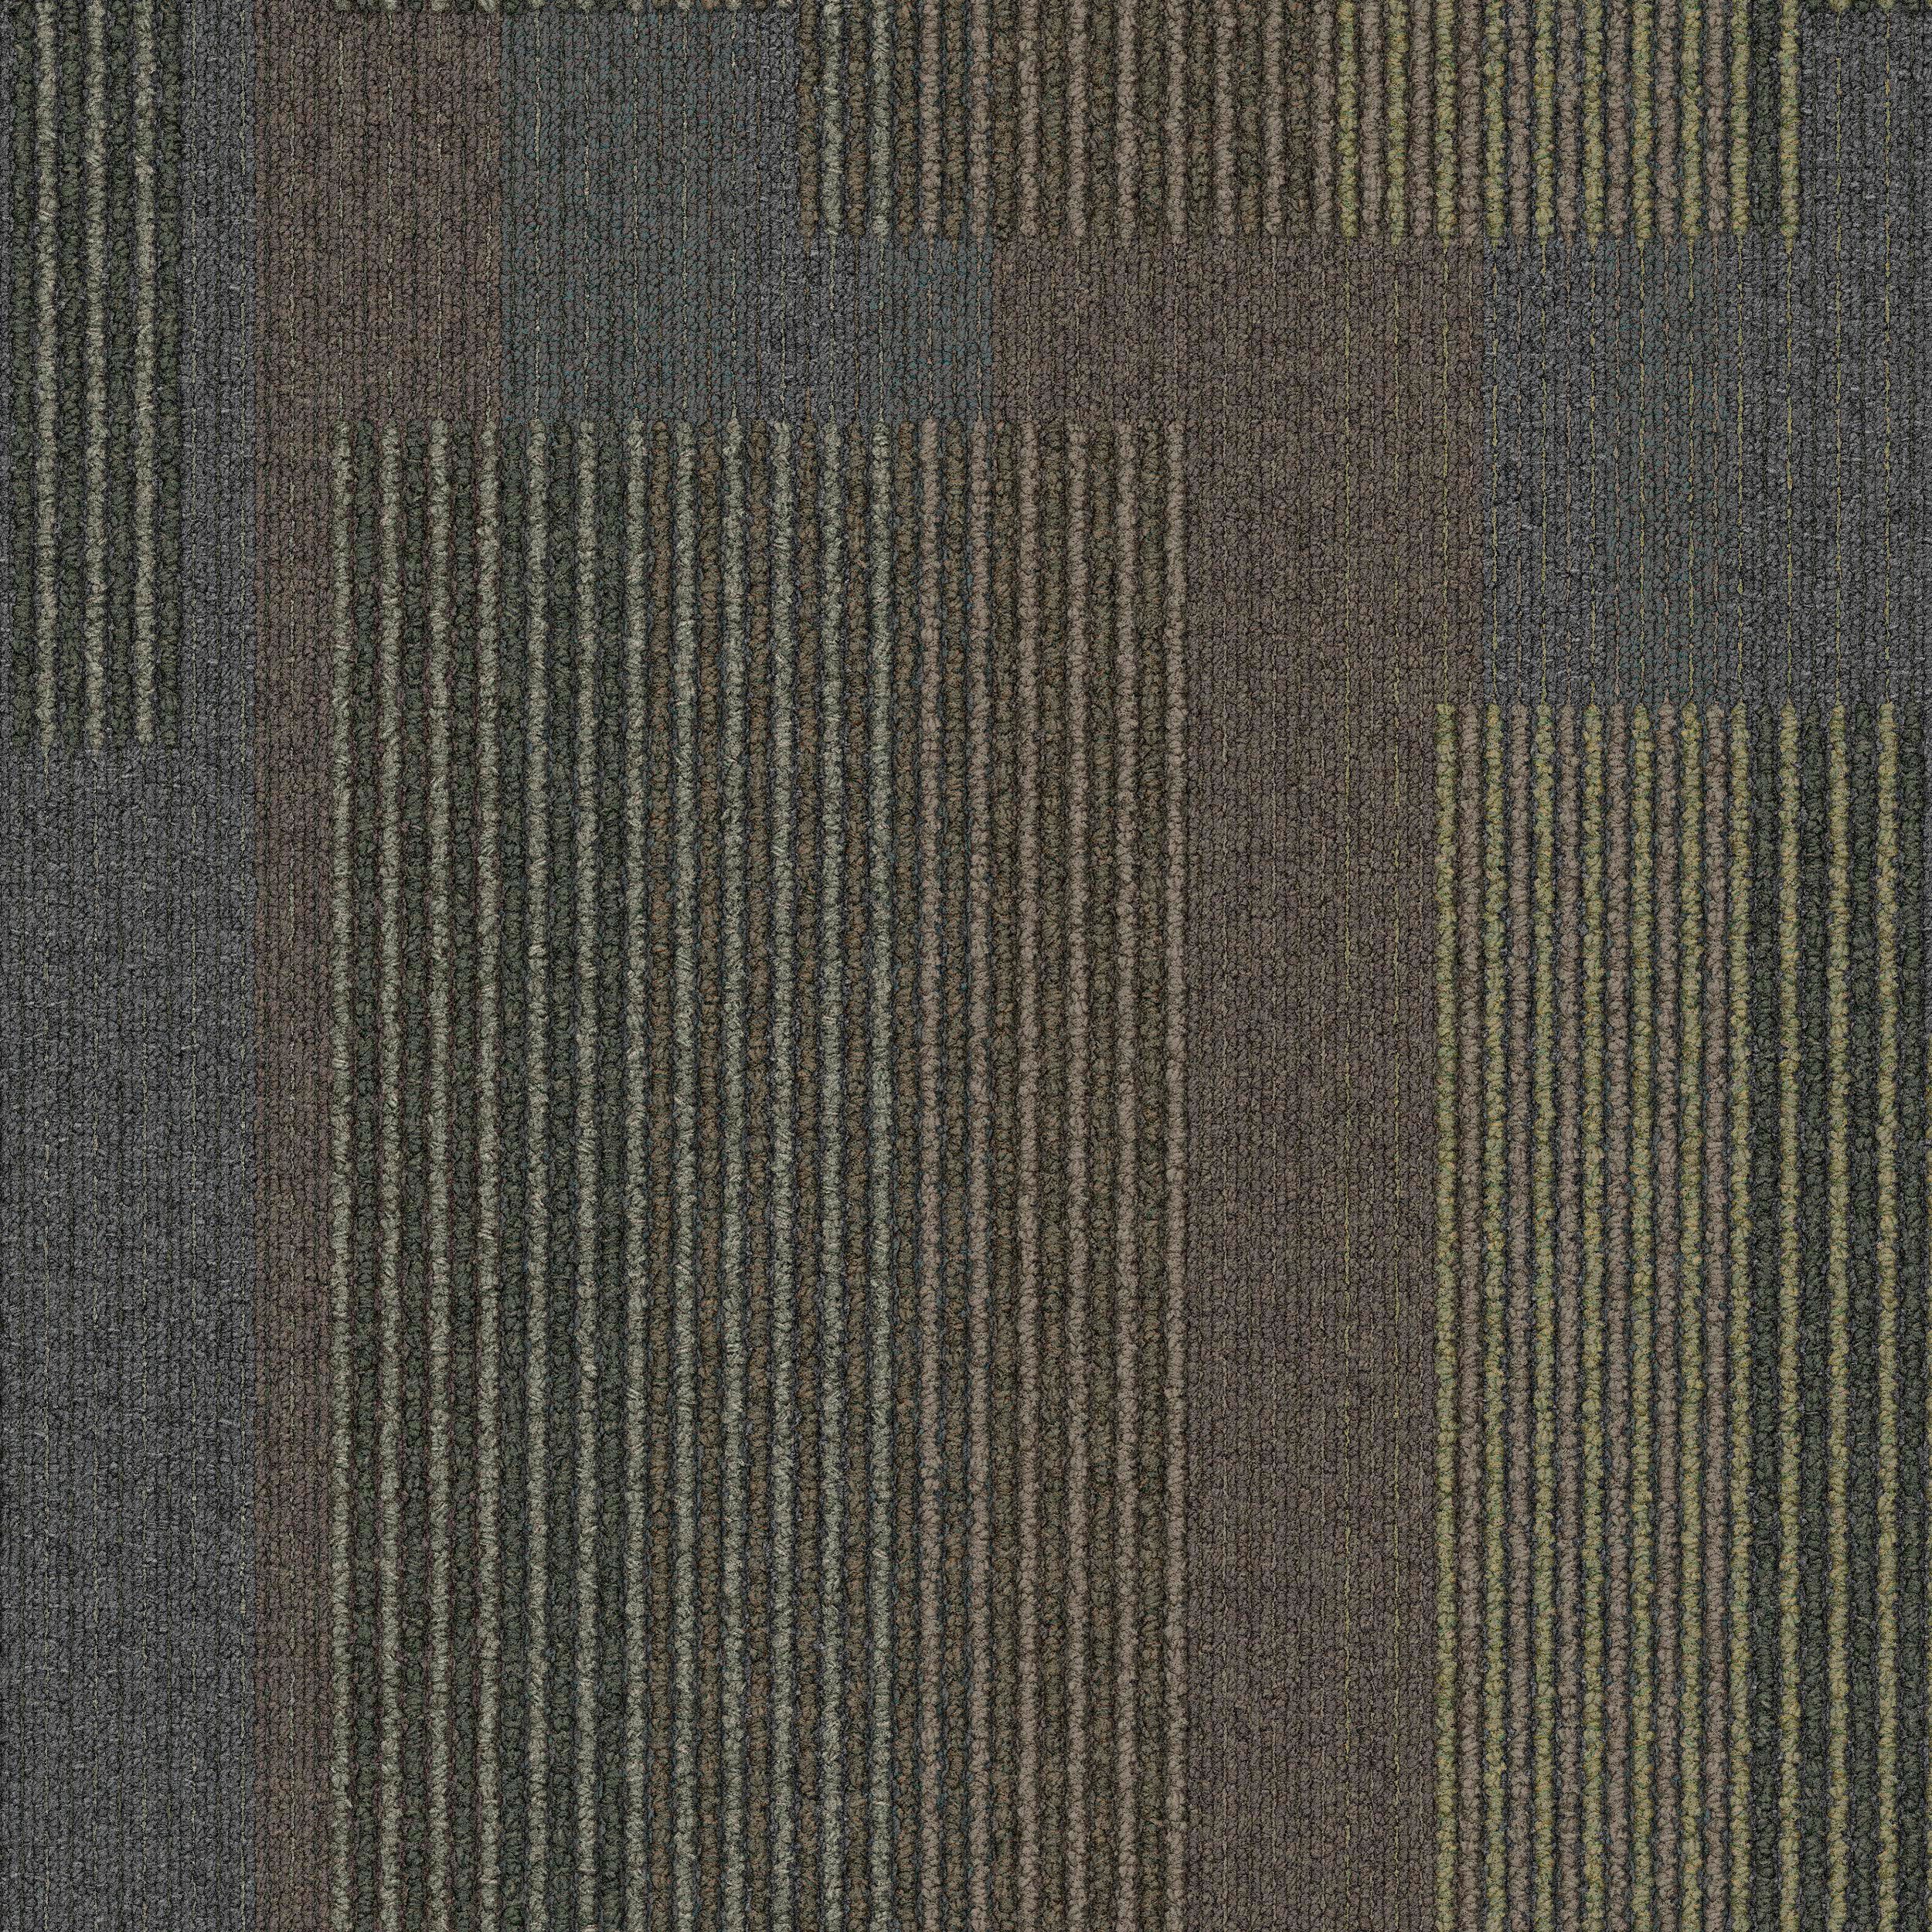 Happening Carpet Tile In Reflections imagen número 1